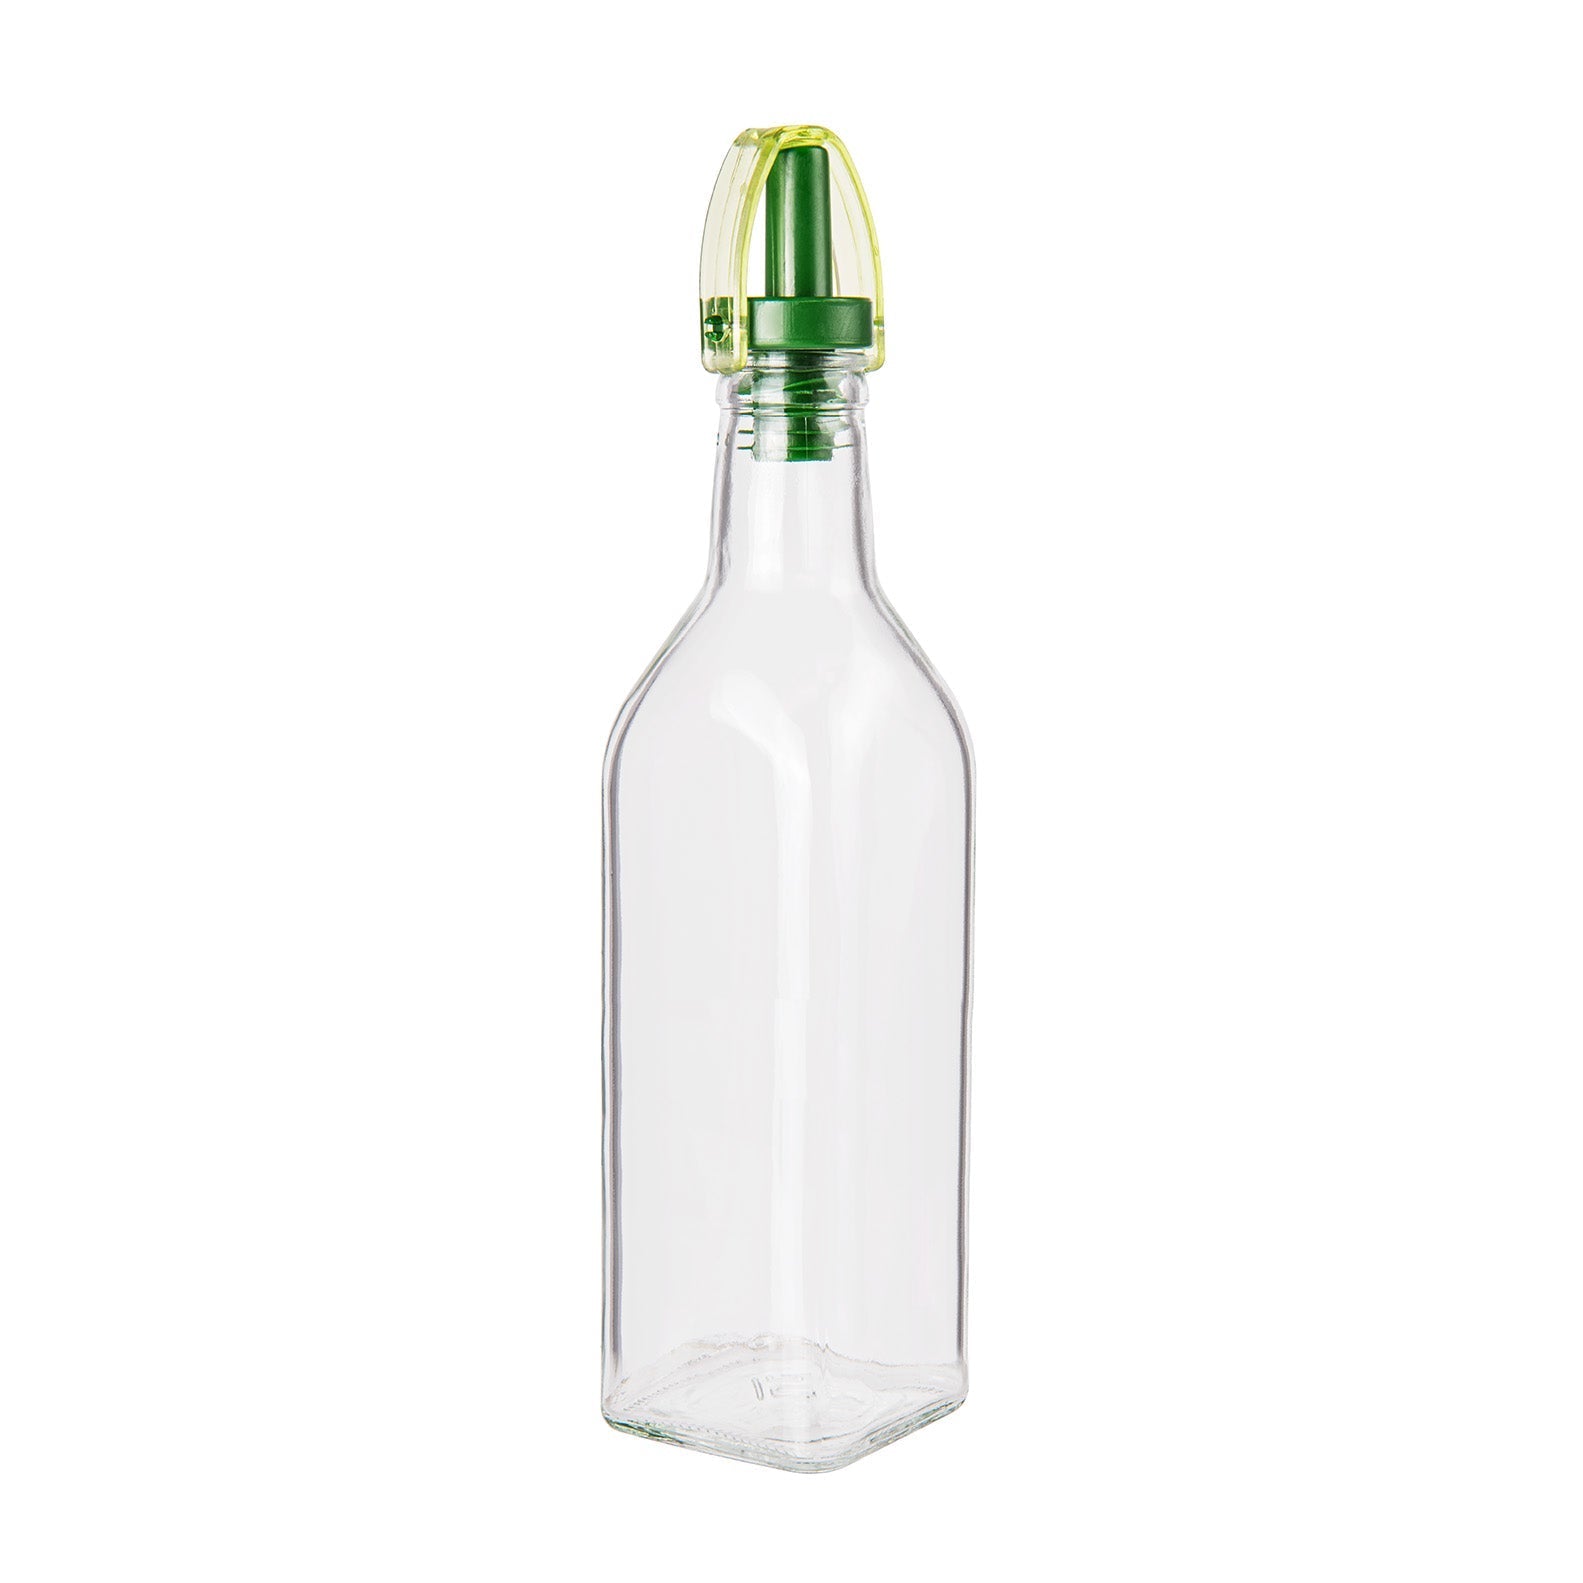 Botella de vidrio con aceite o dispensador de vinagre - 250 ml